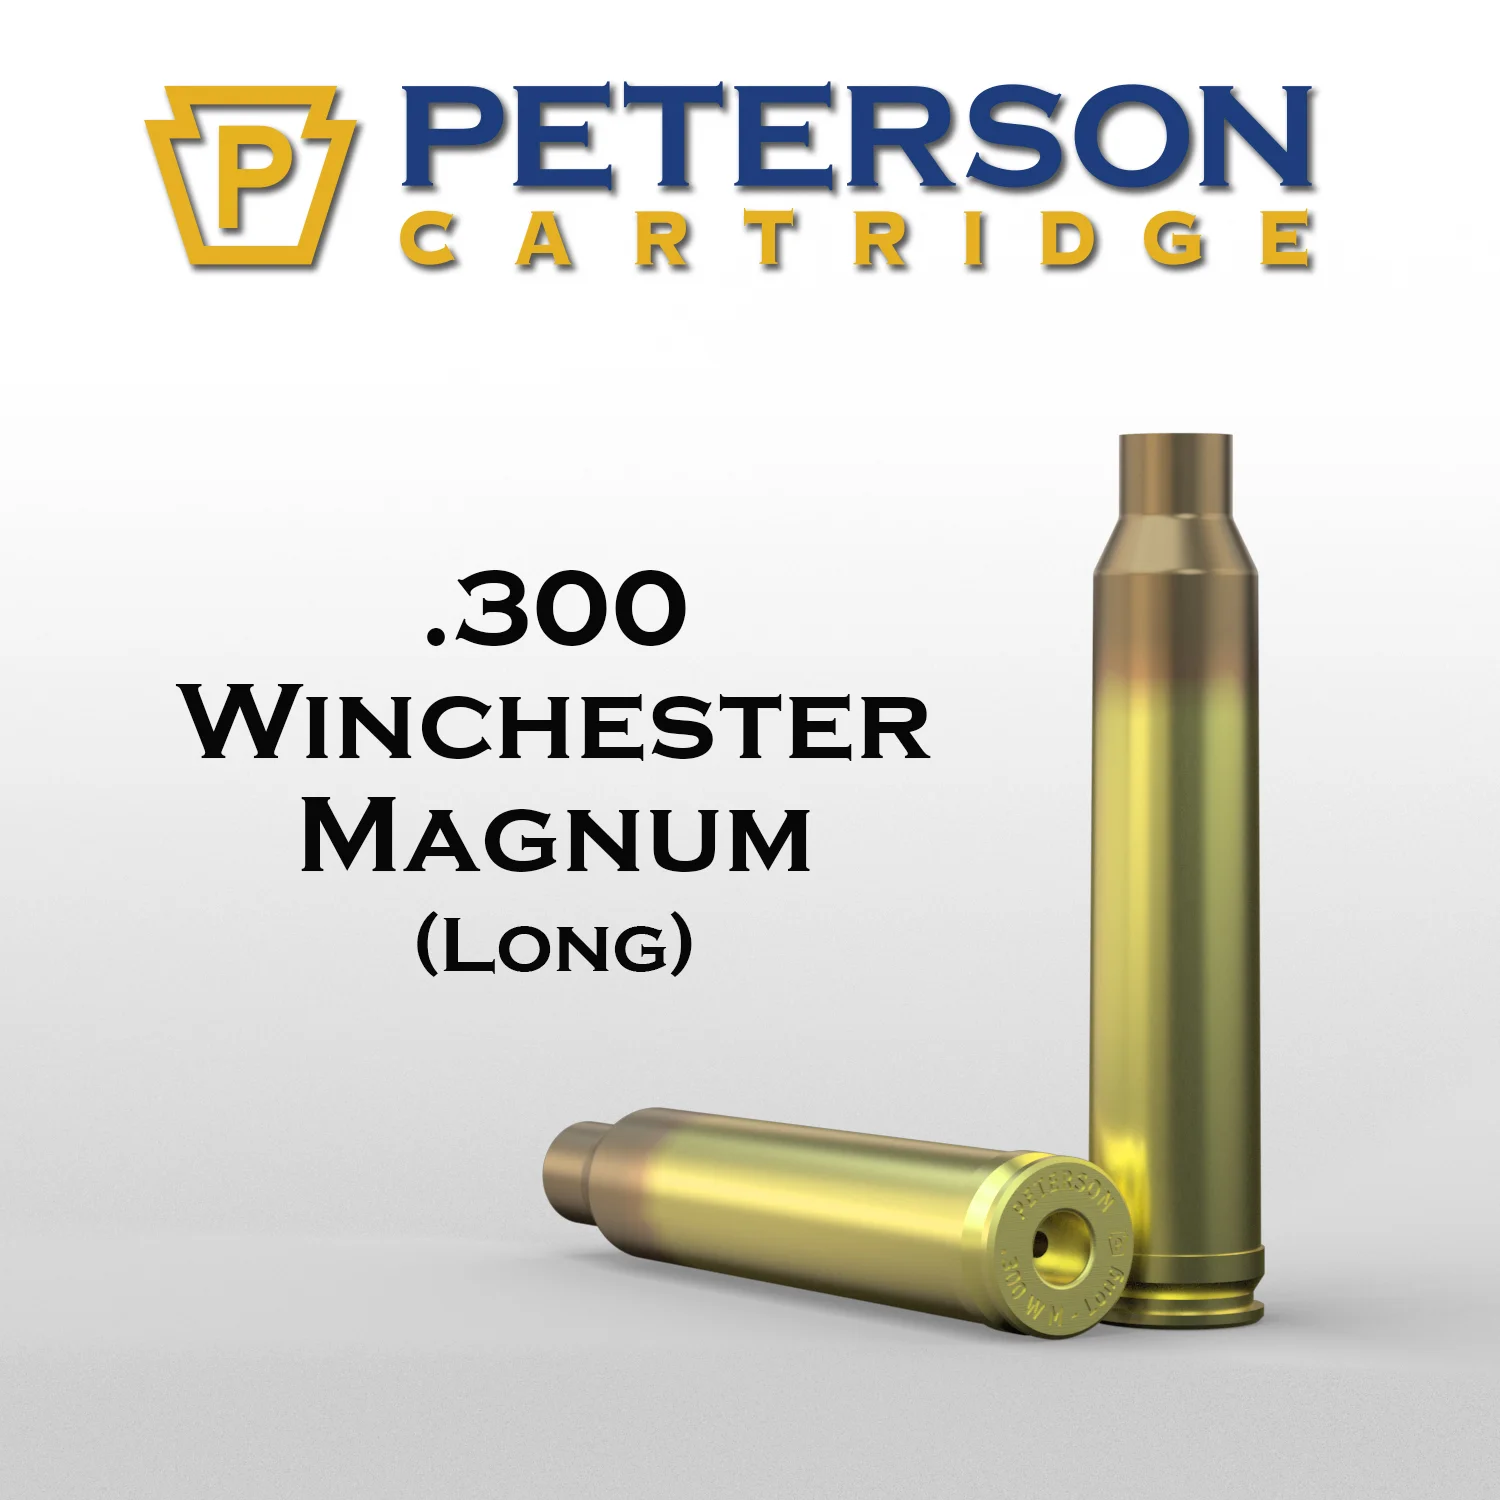 Peterson Cartridge 300 Winchester Magnum Long Unprimed Brass 50ct